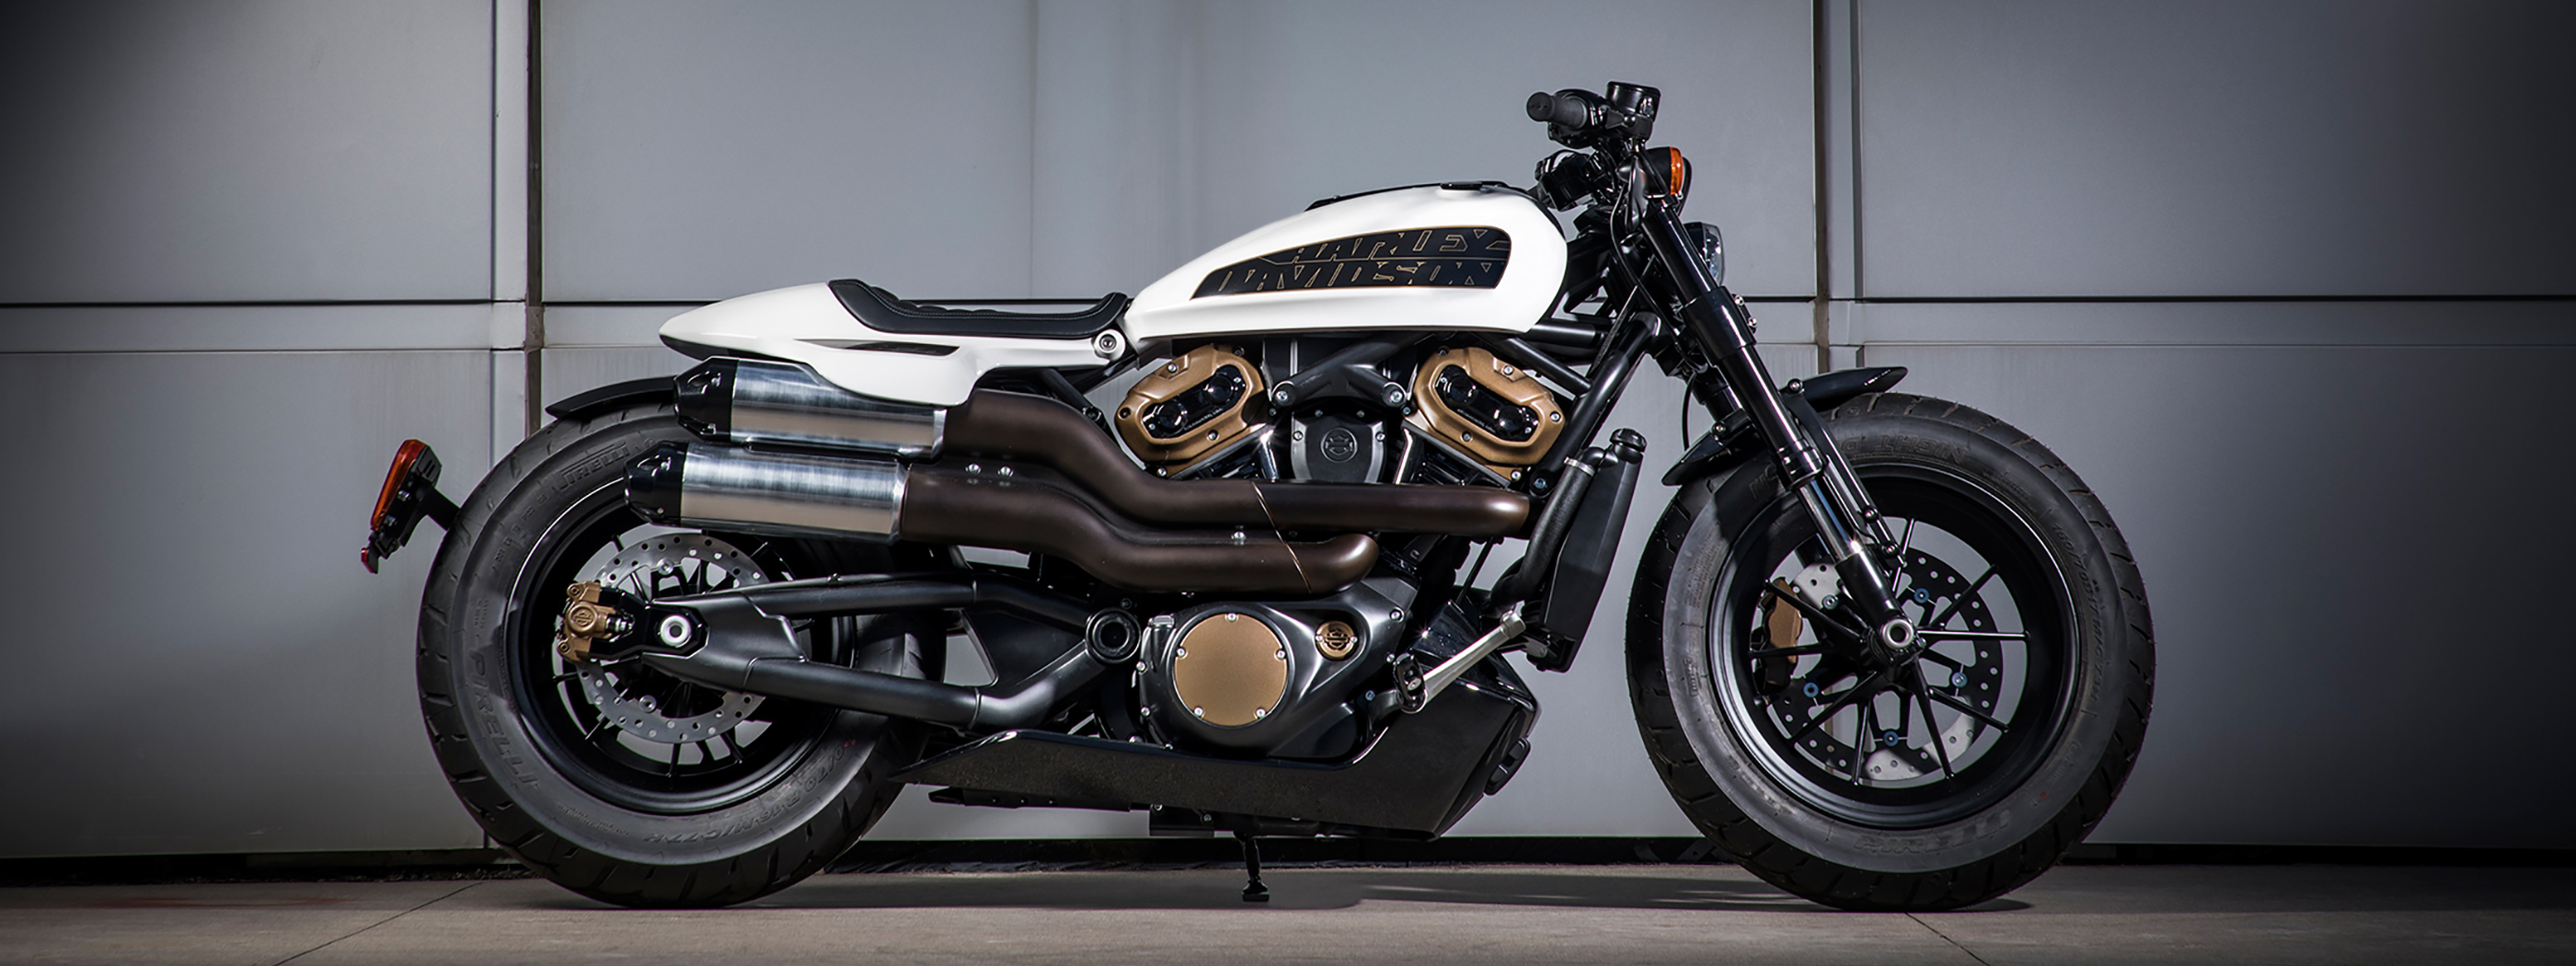 Model Kustom Performa Tinggi Harley Davidson Indonesia